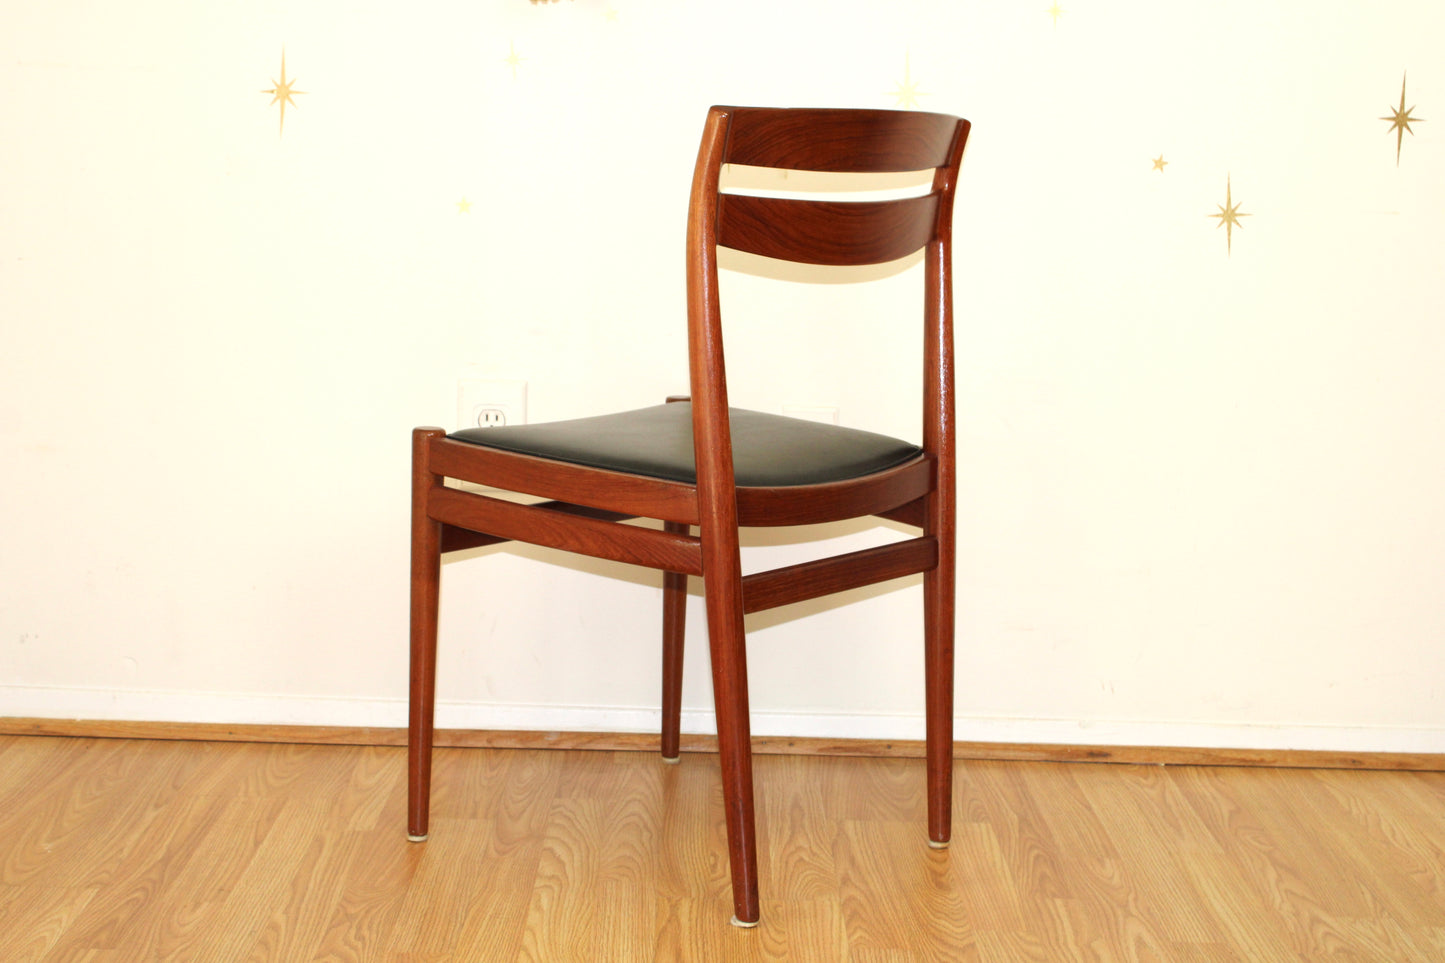 Set of 4 Norwegian Dining Chair by Bruskbo